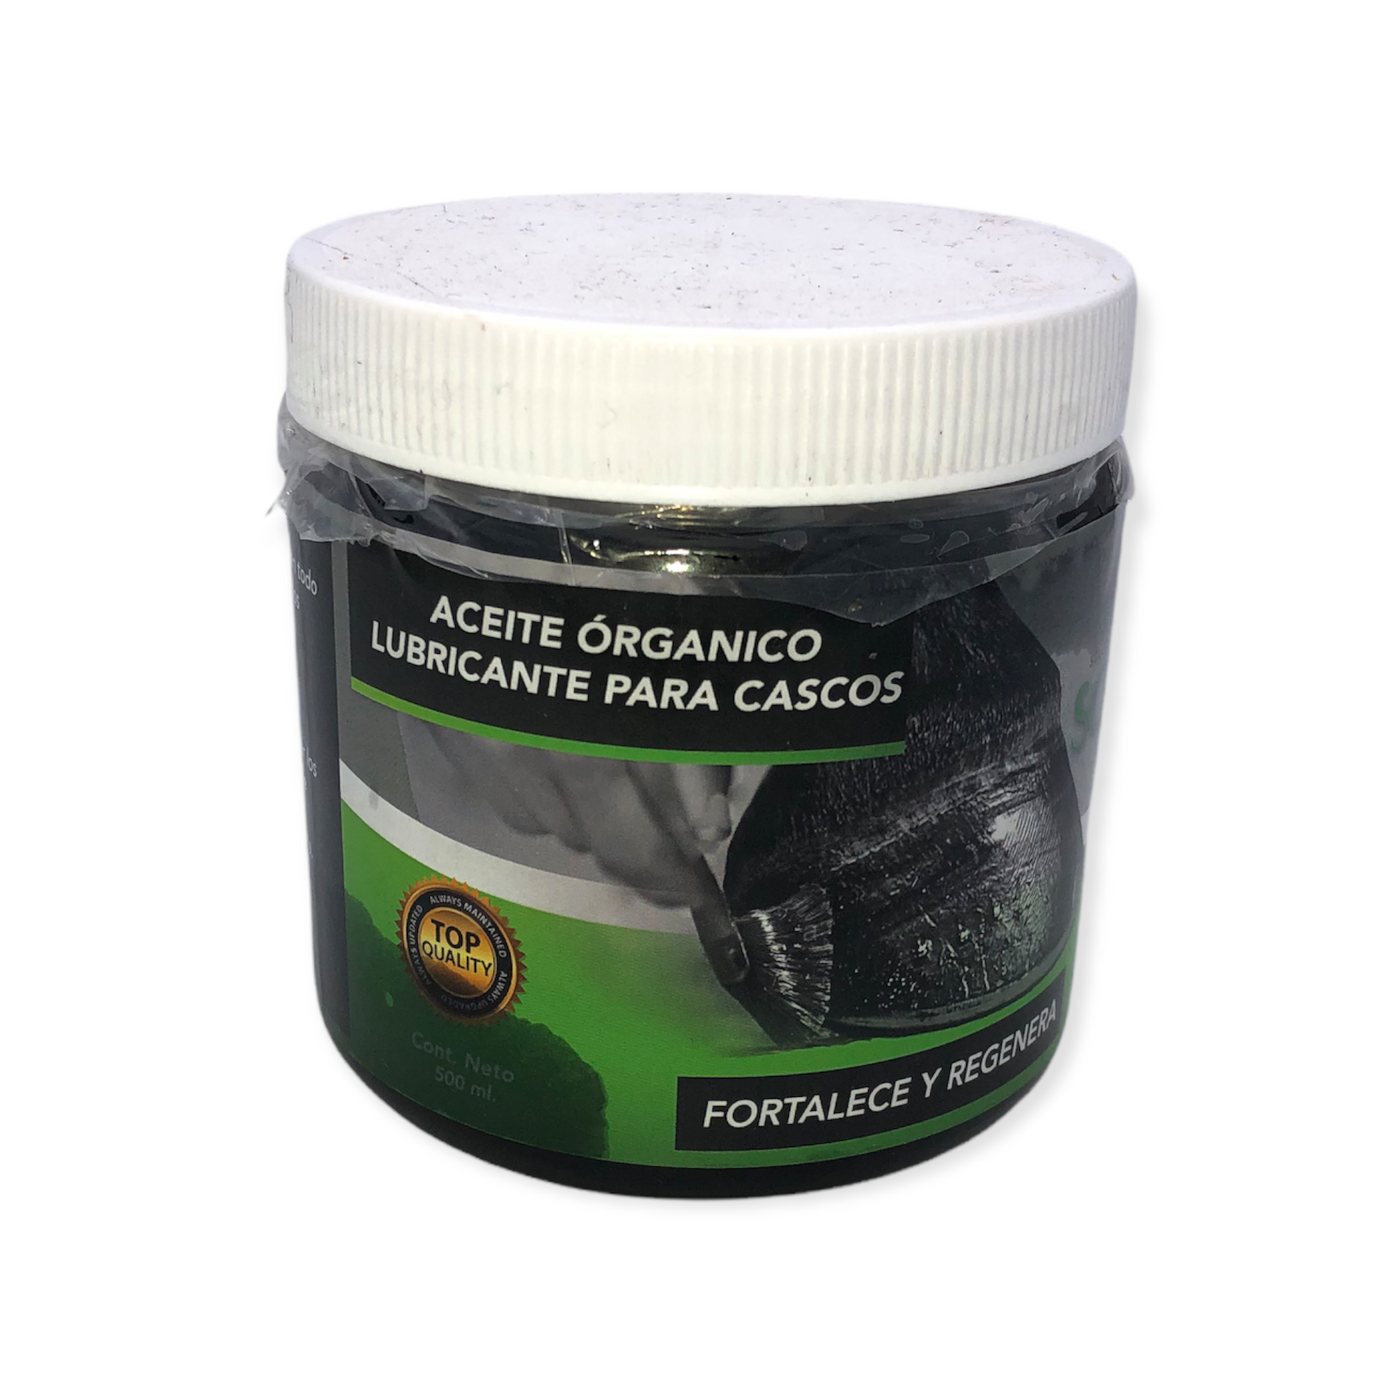 Aceite orgánico lubricante para cascos 500 ml